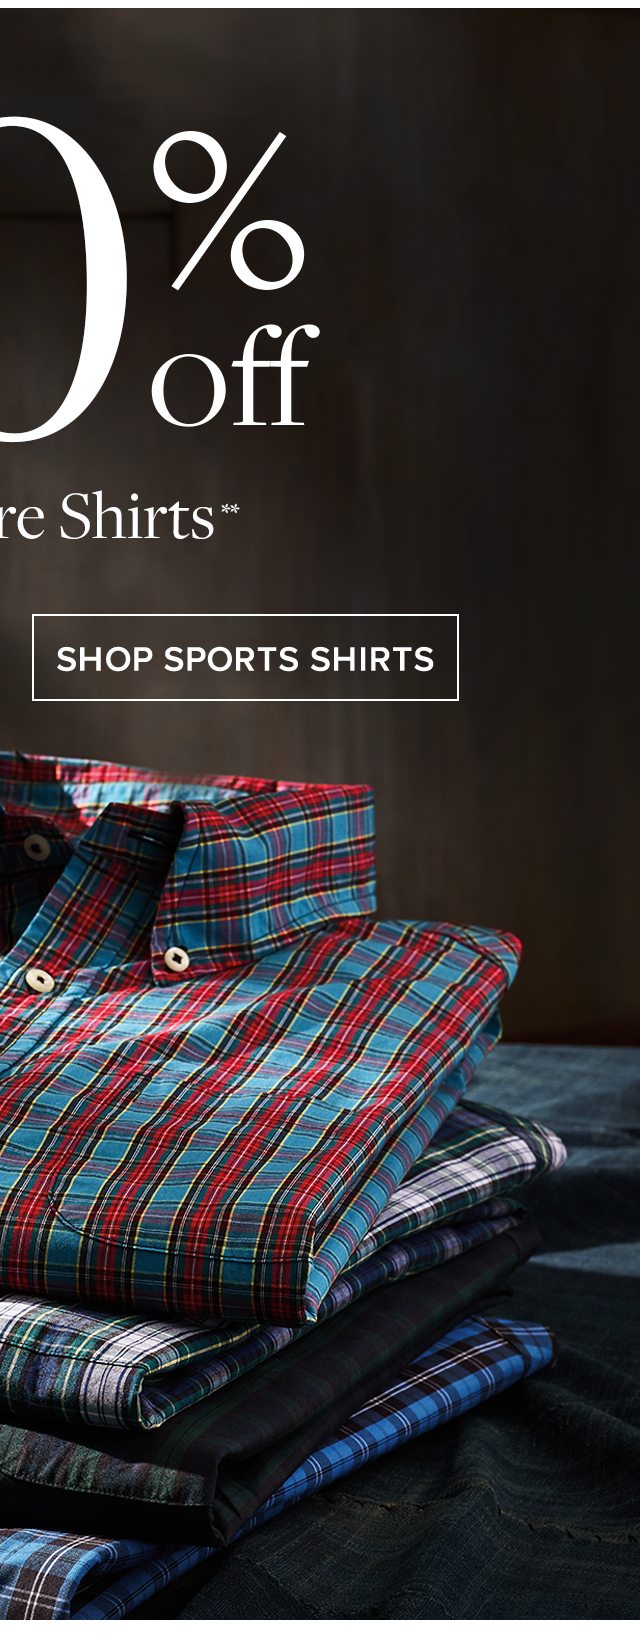 30% off 3 or More Shirts Shop Sports Shirts